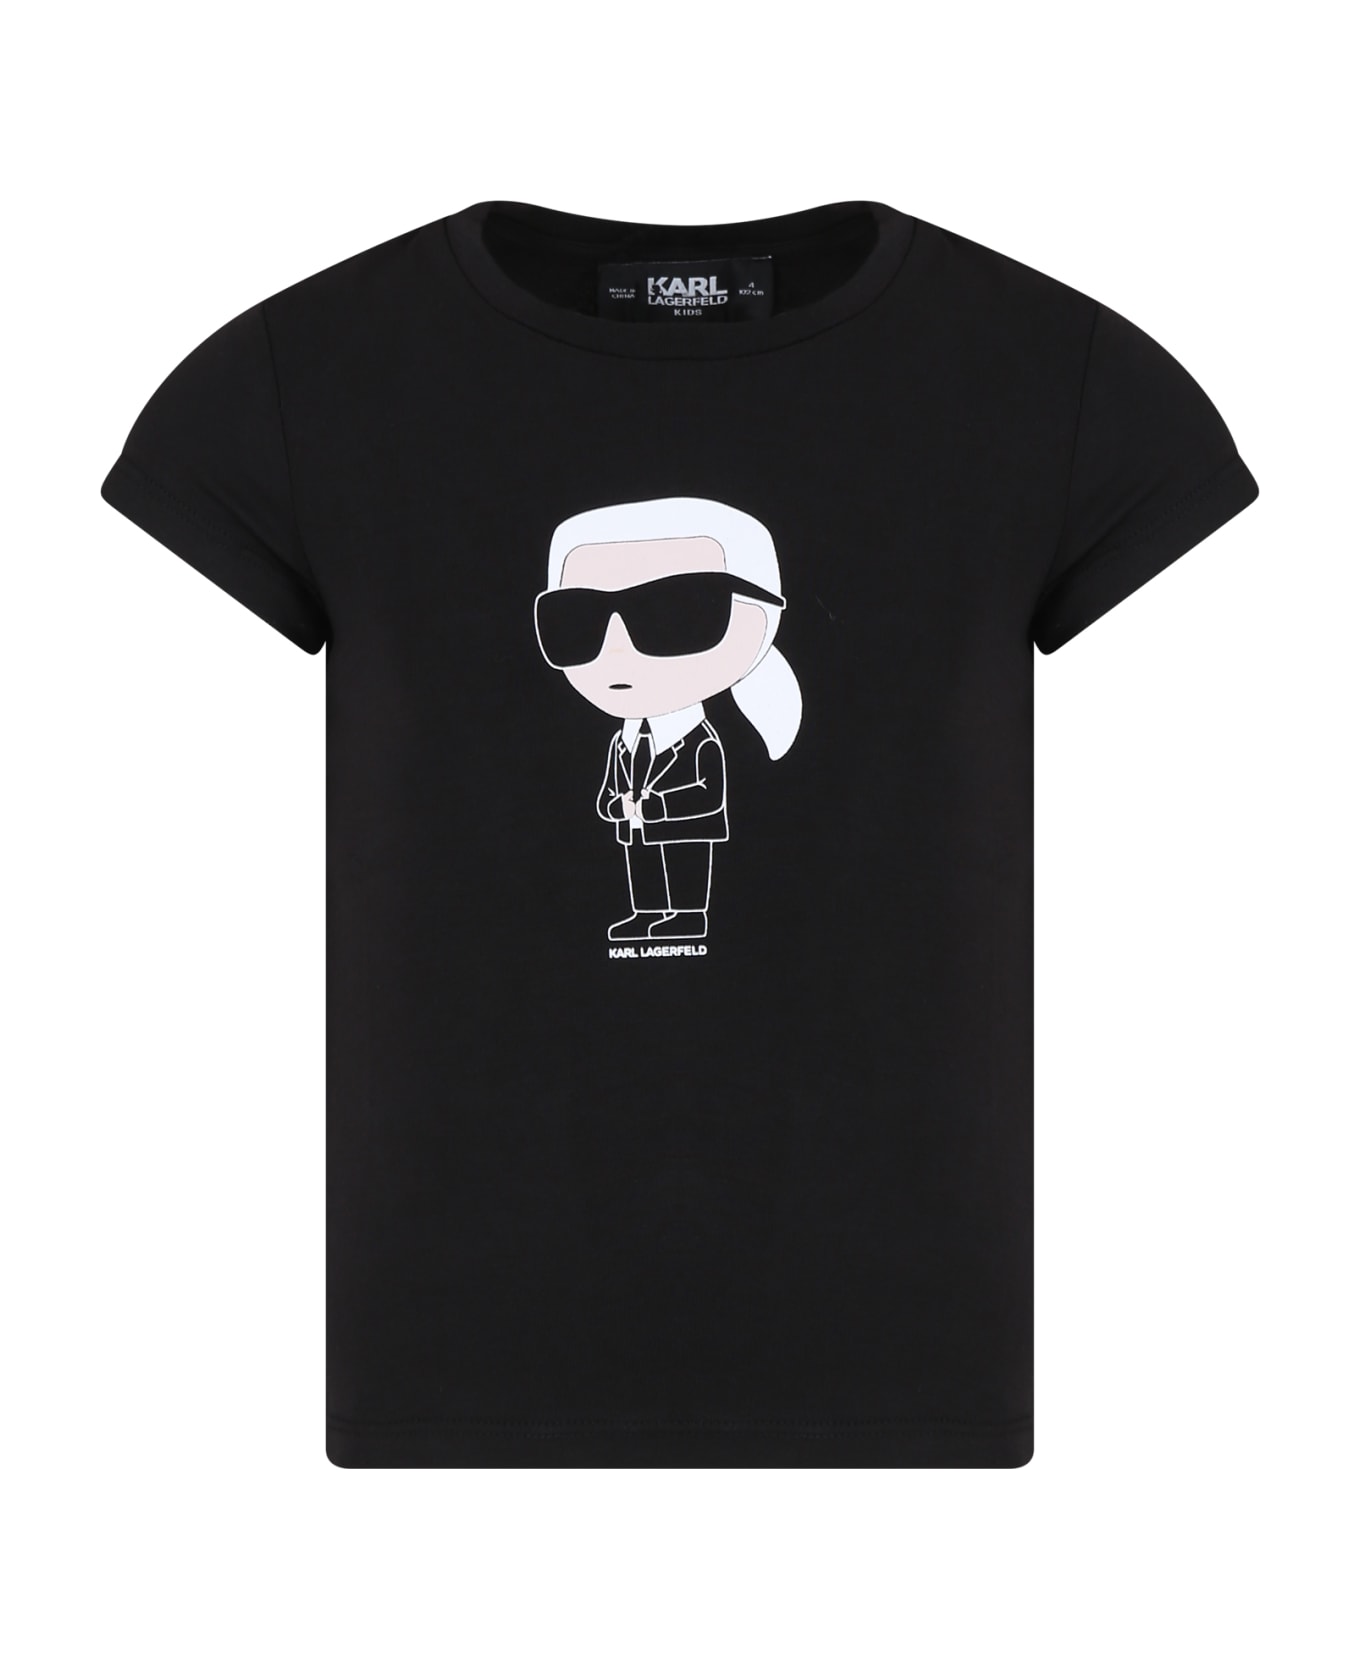 Karl Lagerfeld Kids Black T-shirt For Girl With Karl Lagerfeld Print And Logo - Black